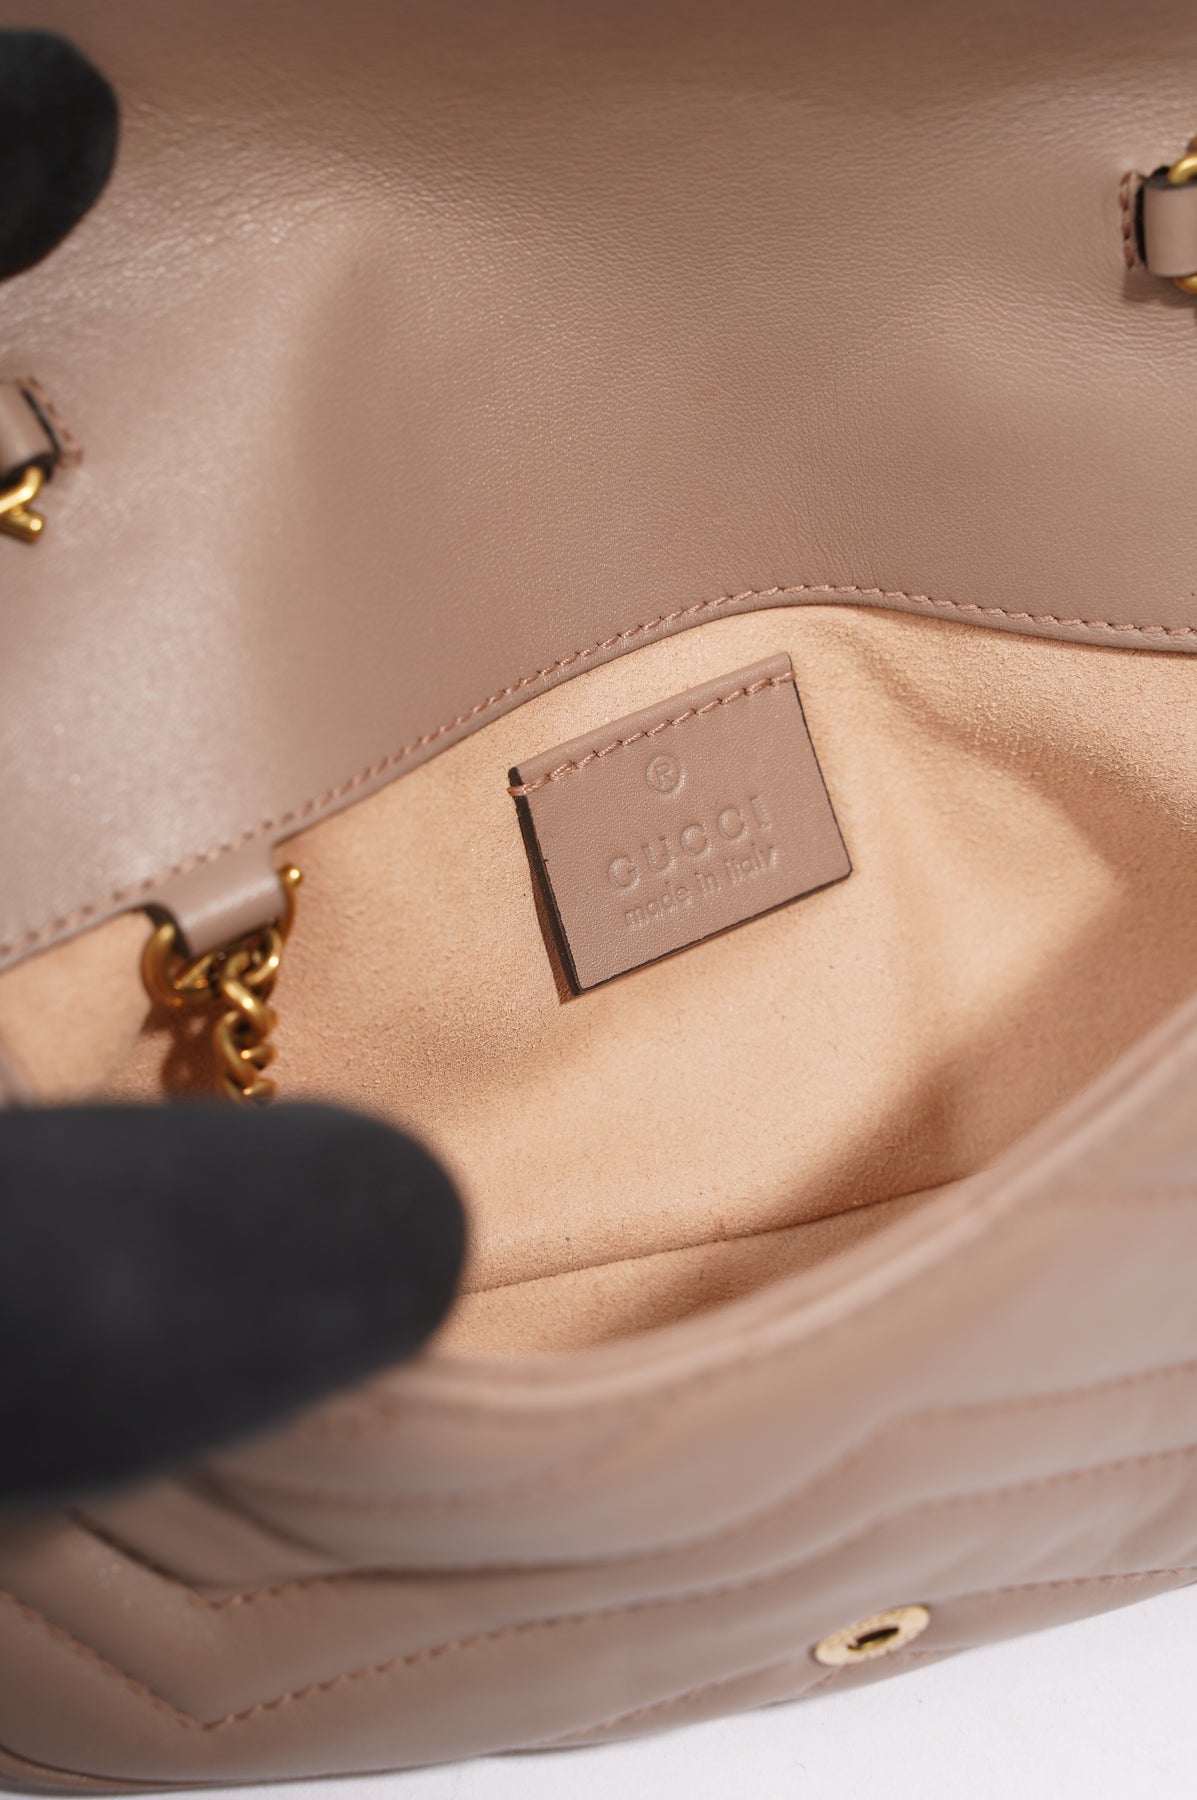 Gucci Pink Super Mini GG Marmont Matelassé Bag for Women